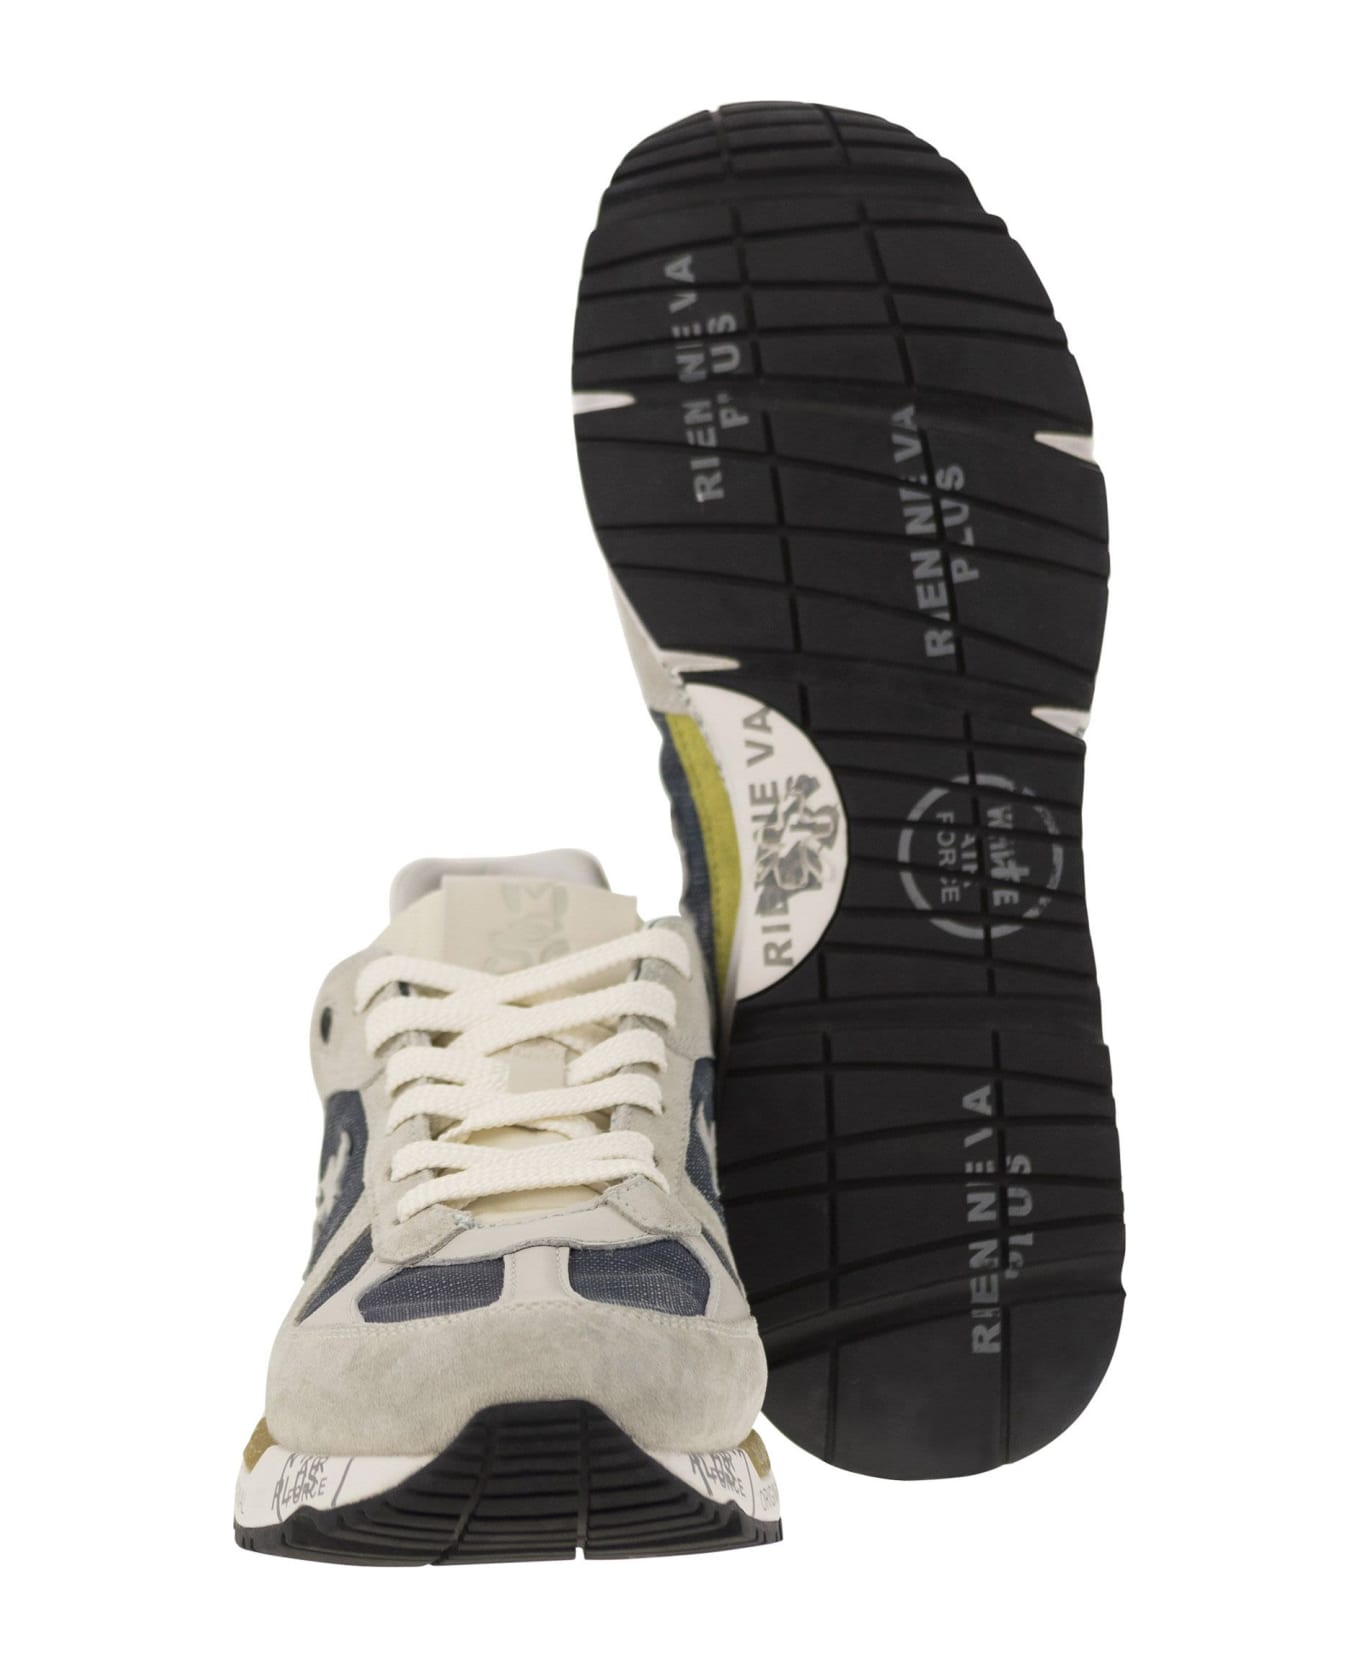 Premiata Mase Sneakers - Grey